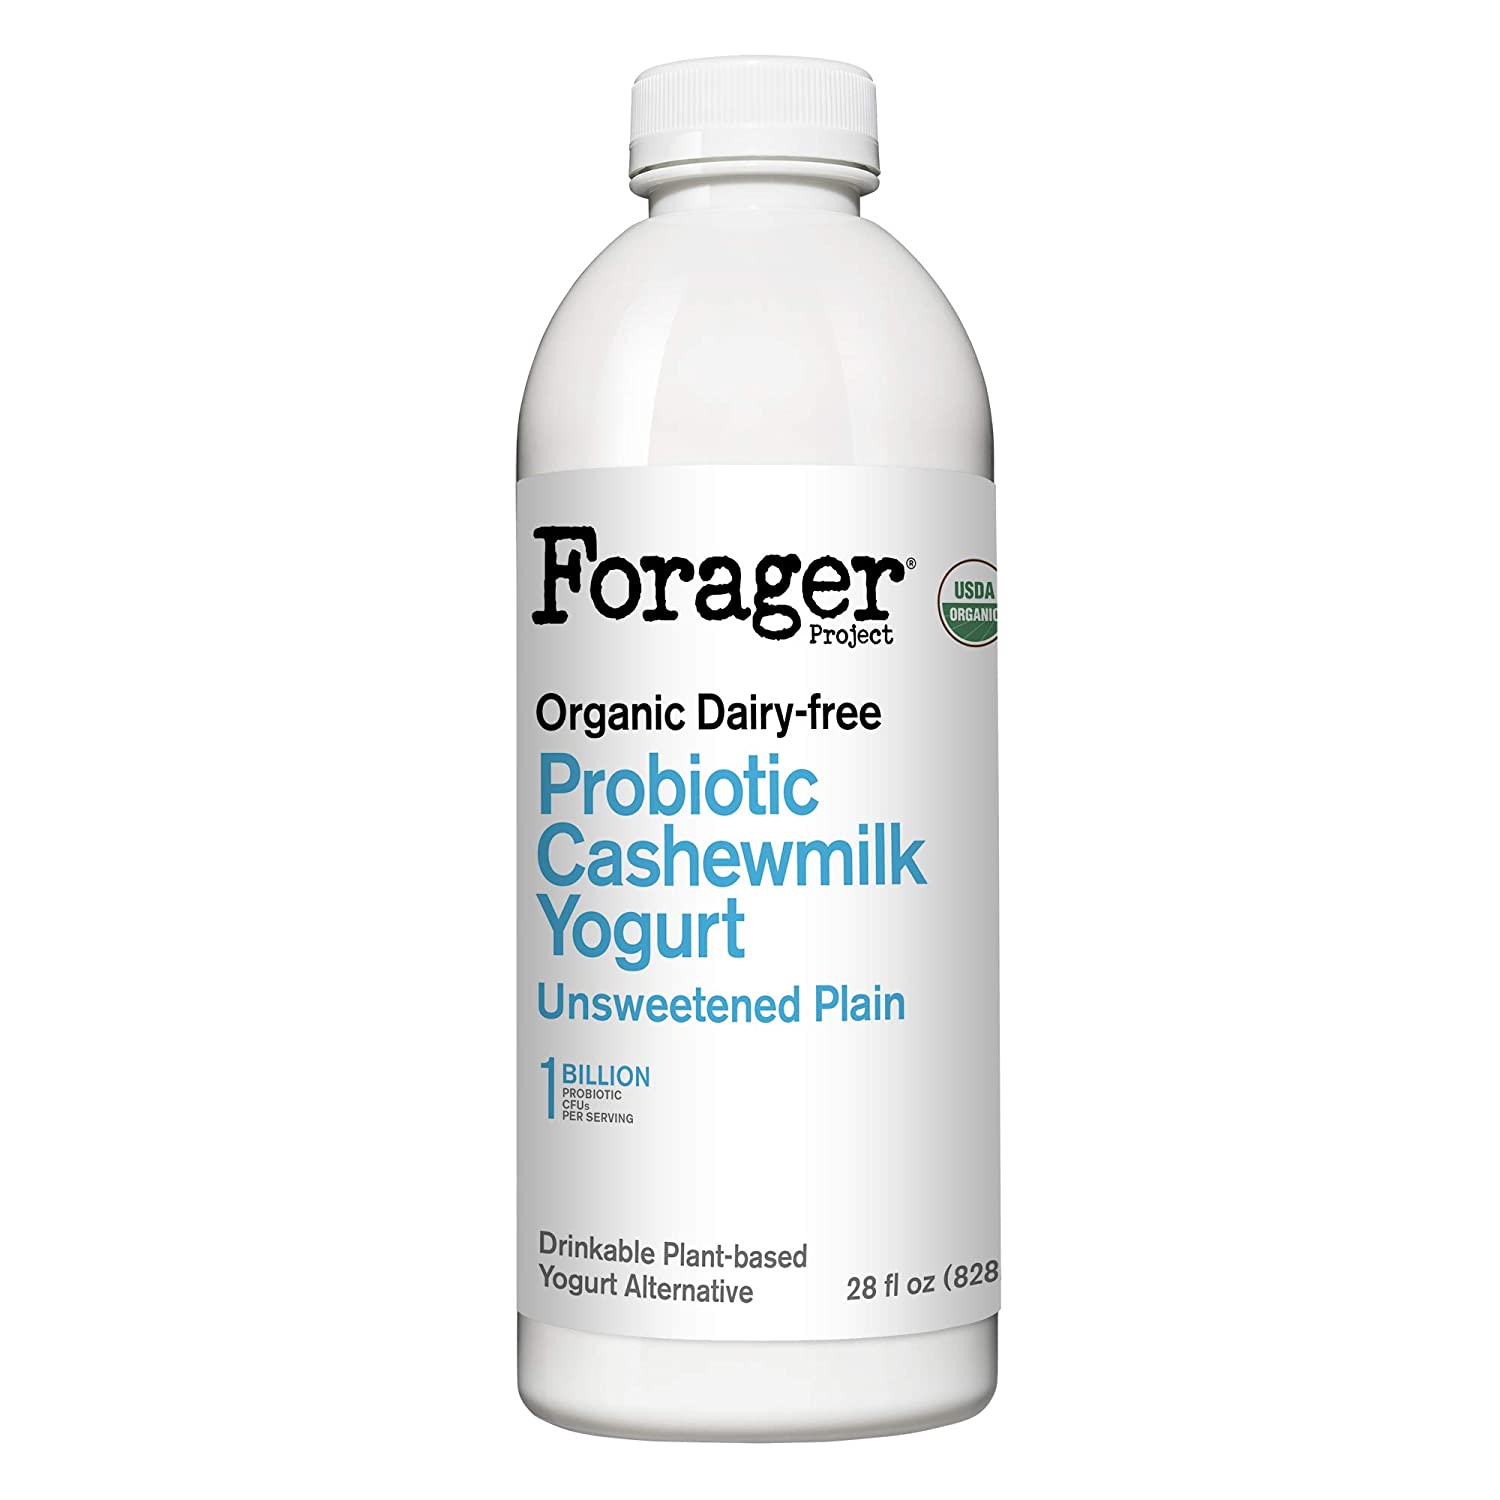 Forager Unsweetened Plain Probiotic Cashewmilk Yogurt, 28oz